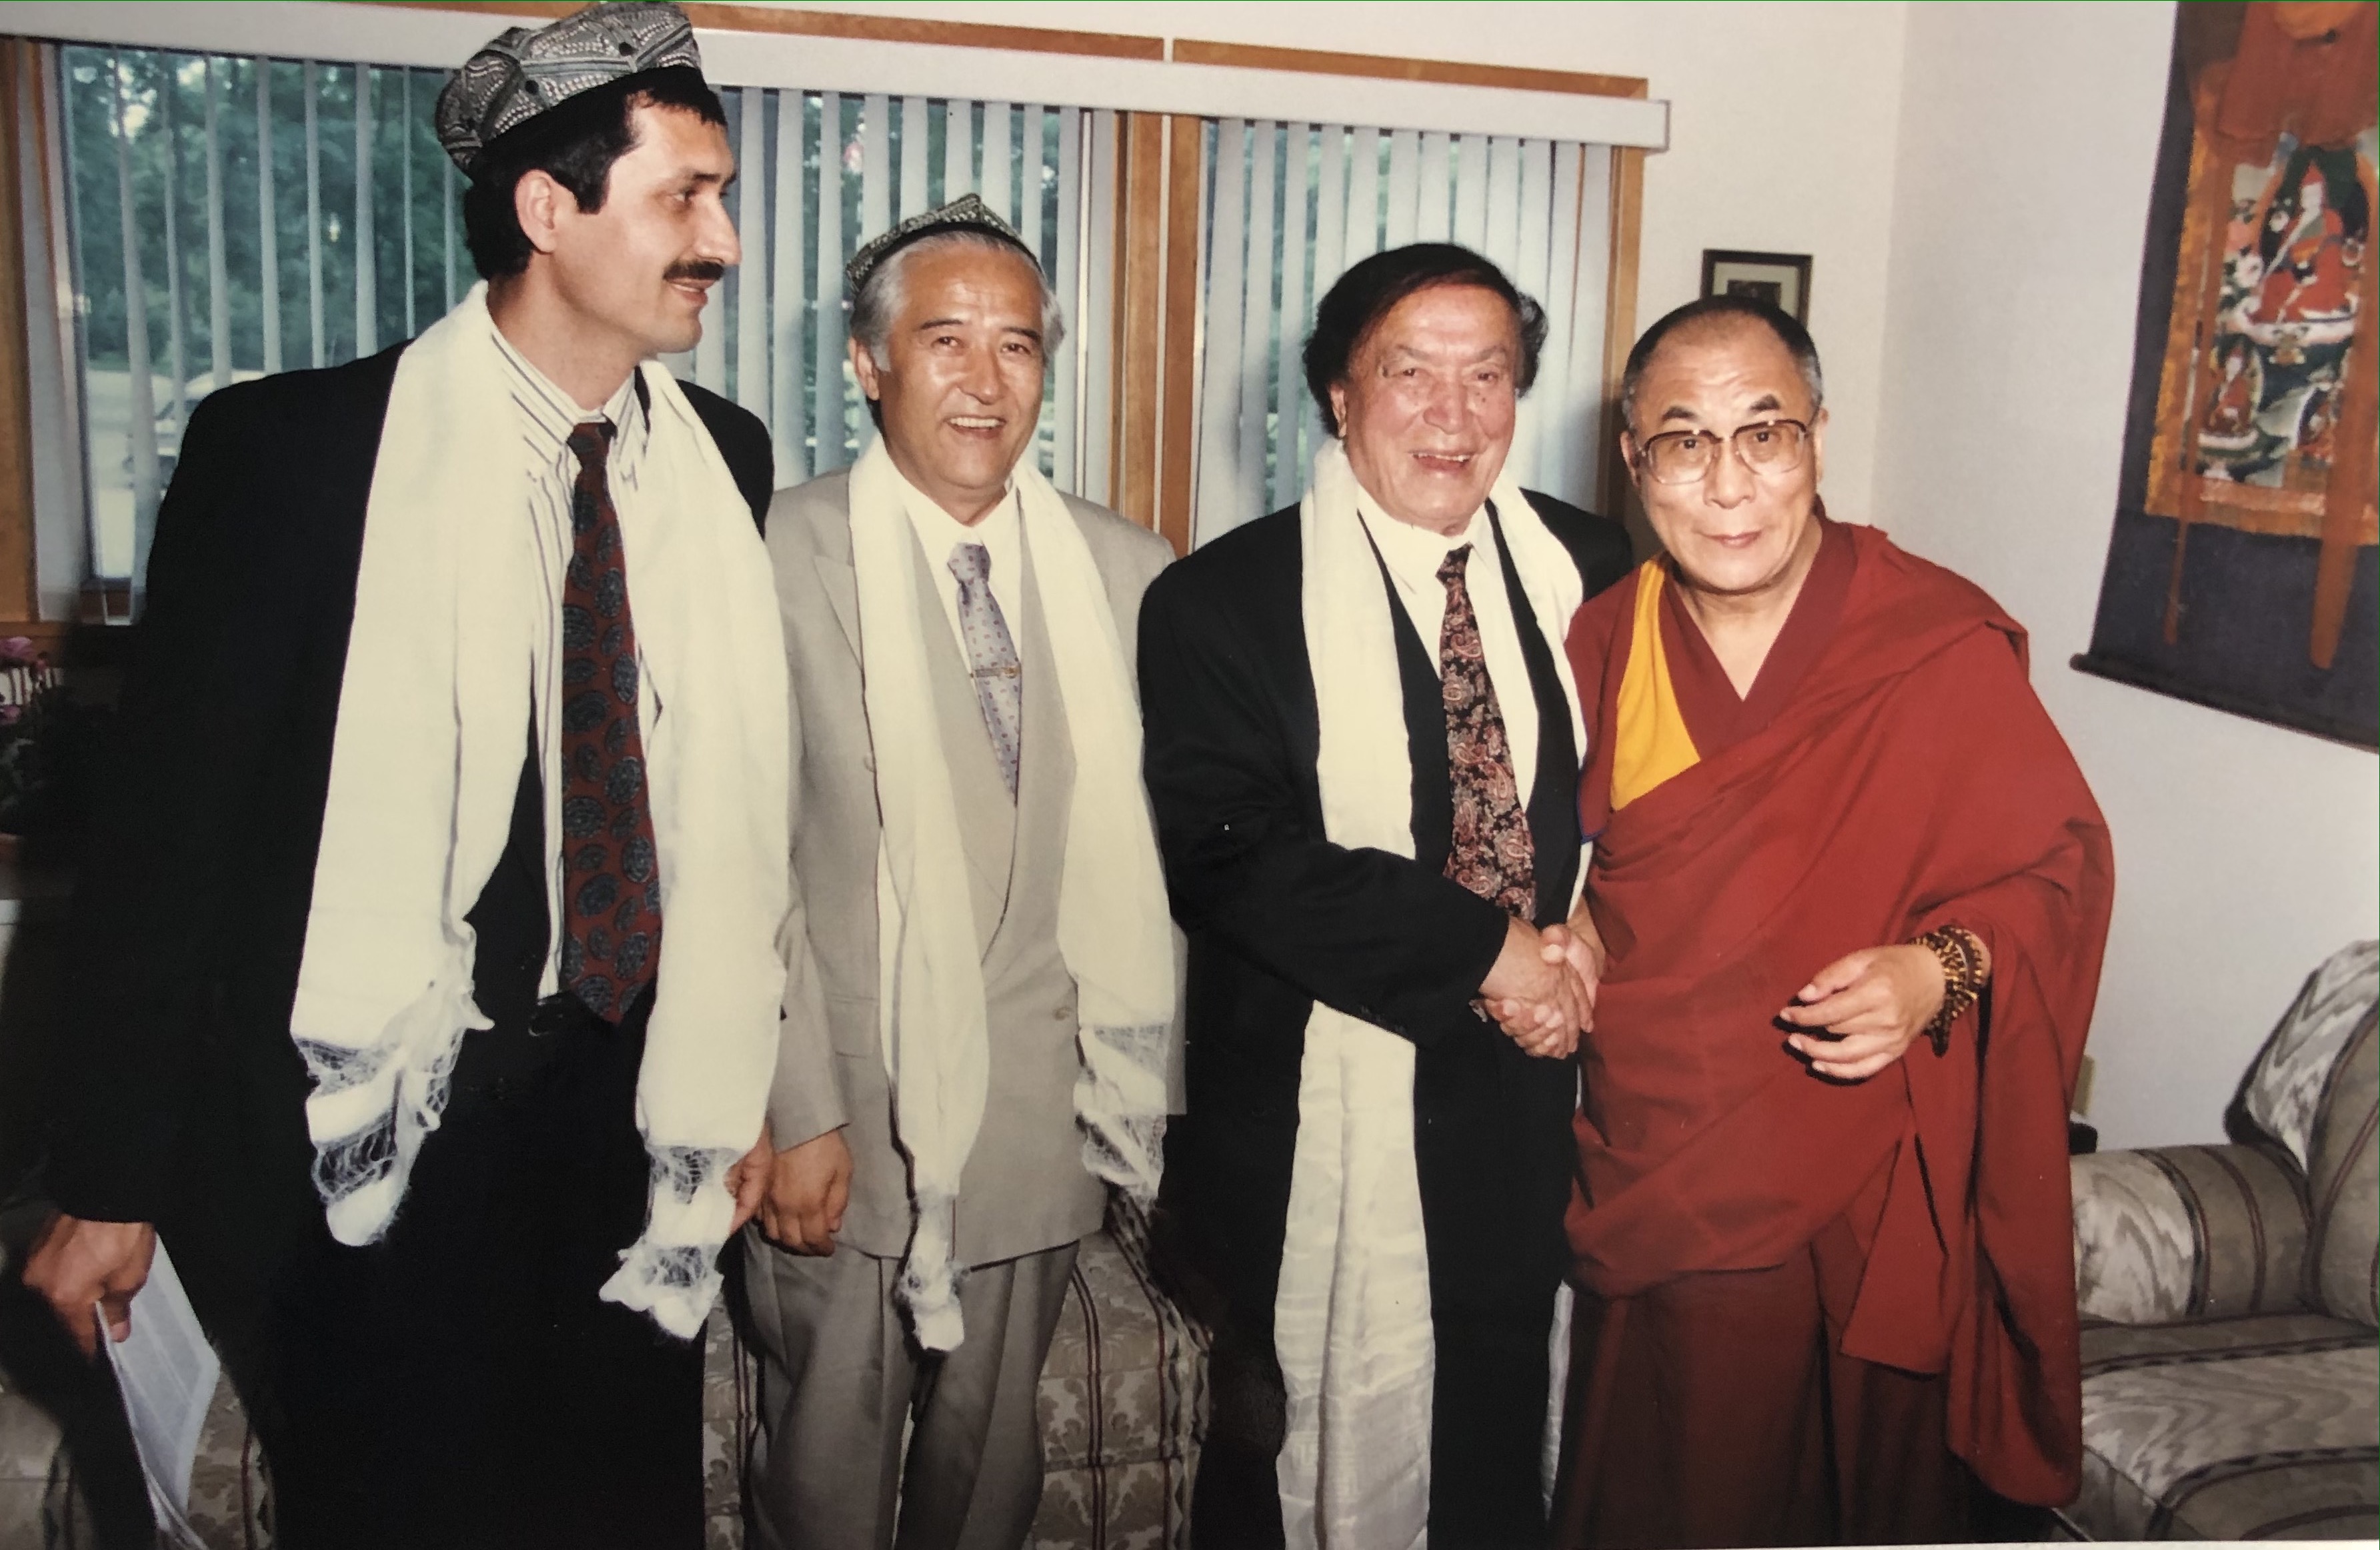 Turani and Dalai Lama